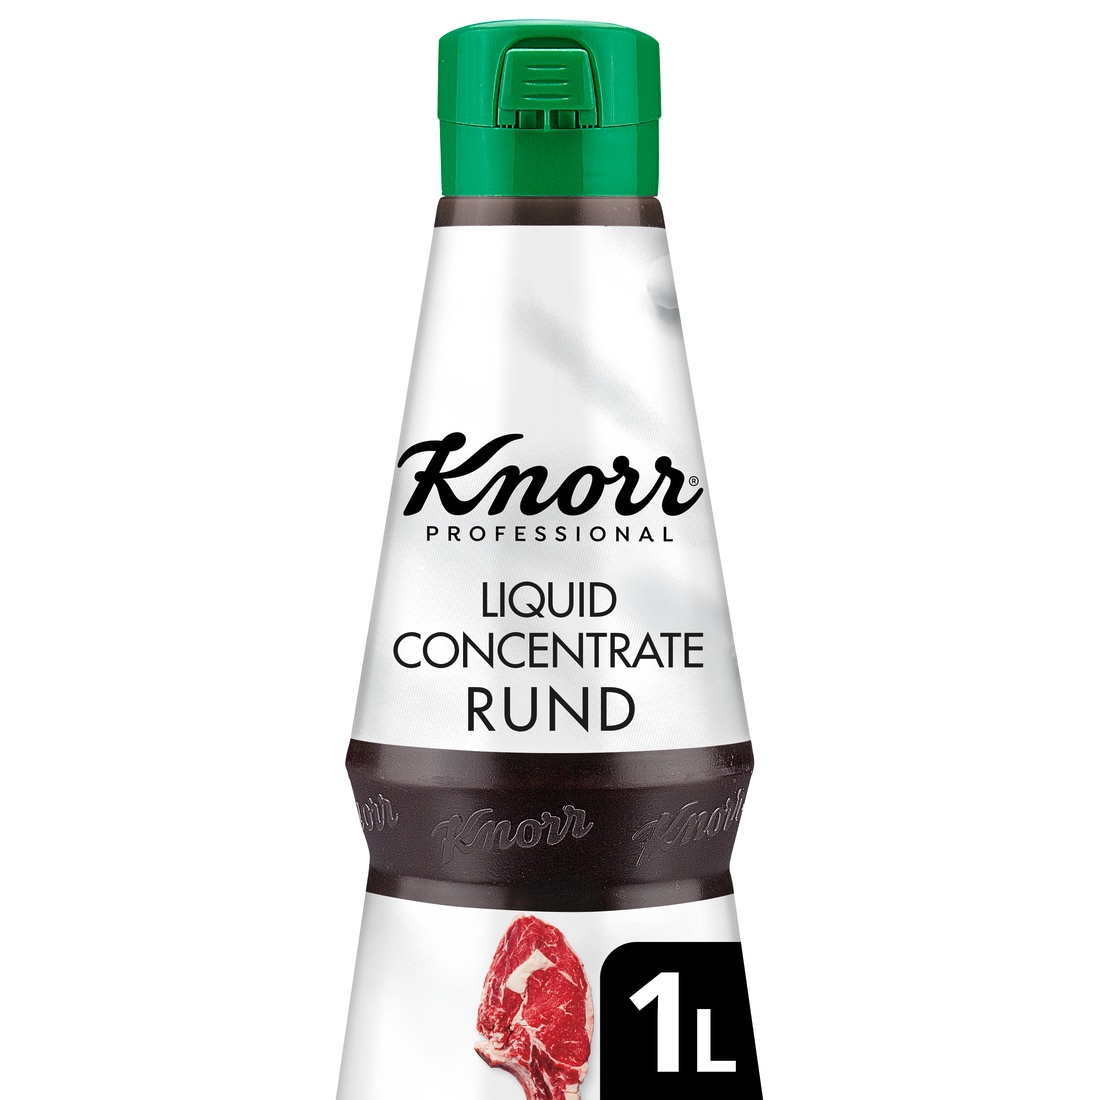 Knorr Professional Liquid Concentrate Rund 1L